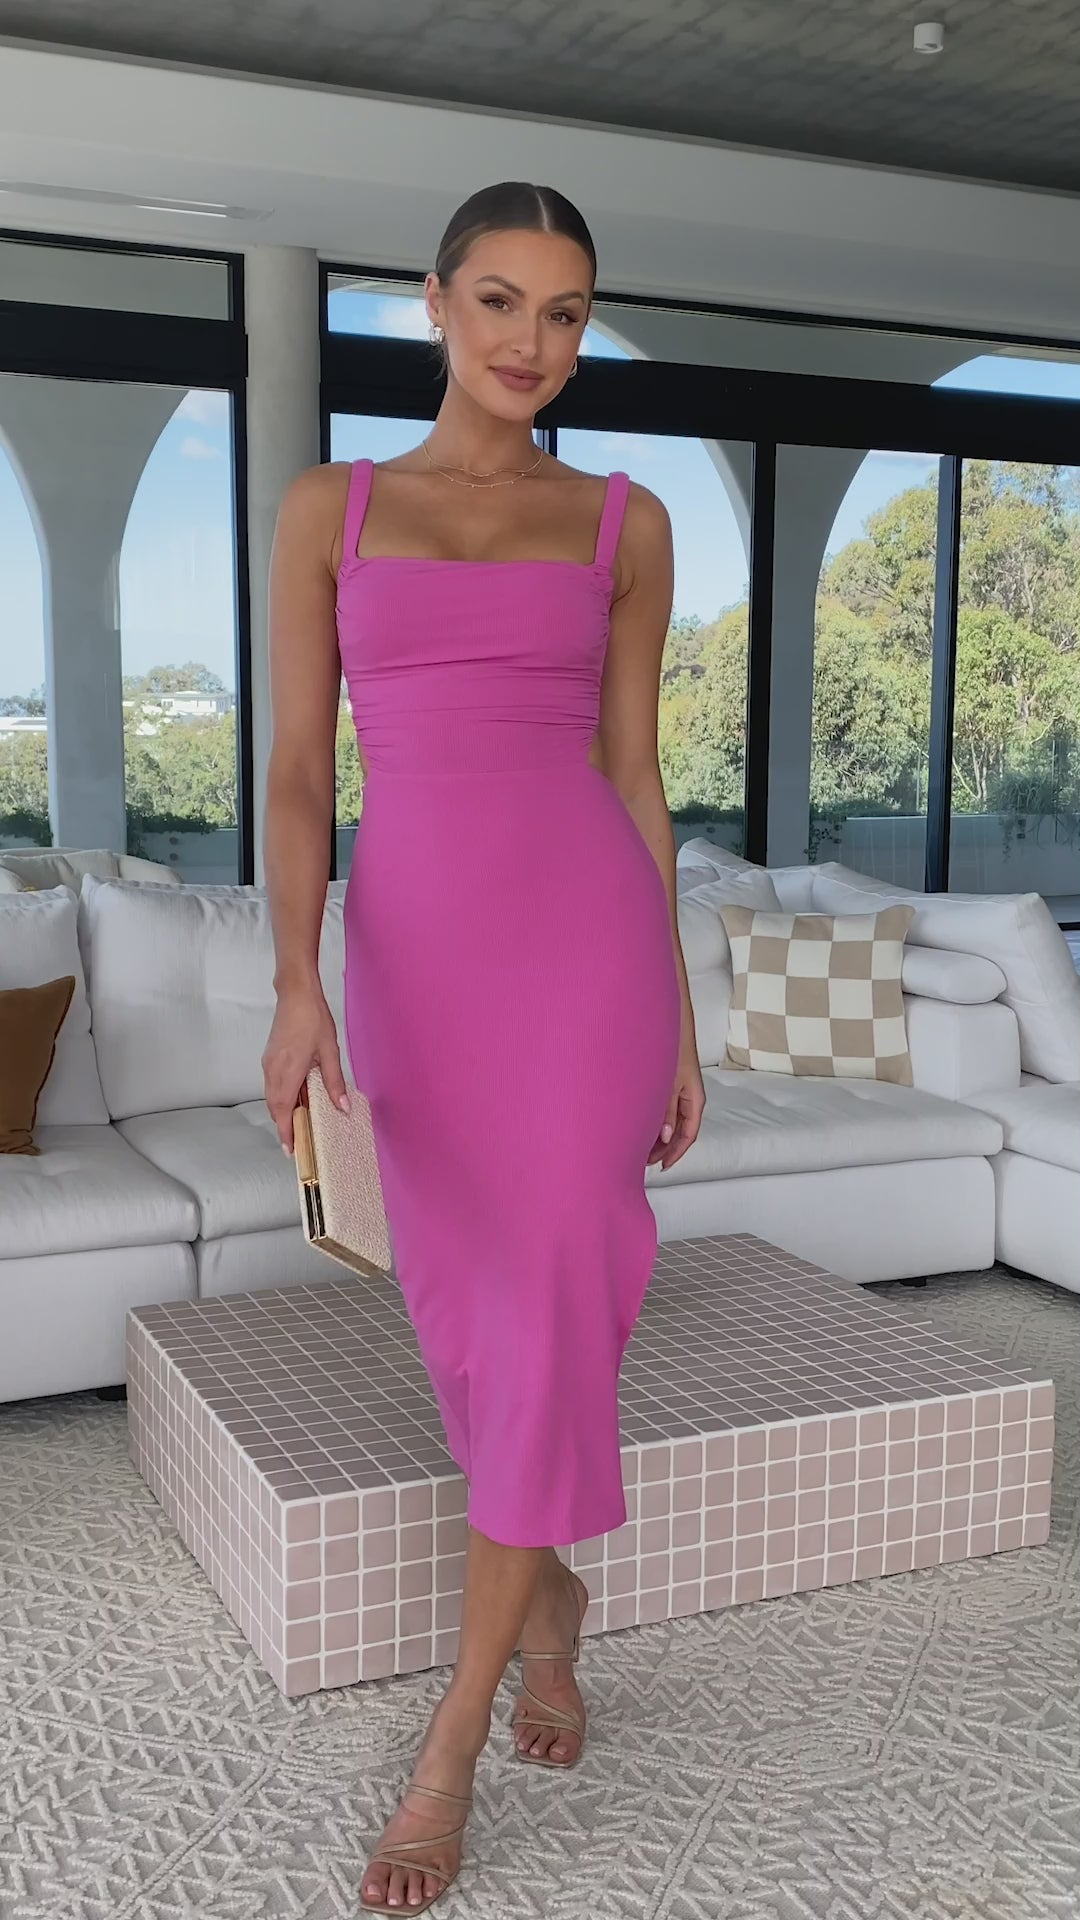 Chloe Midi Dress - Pink